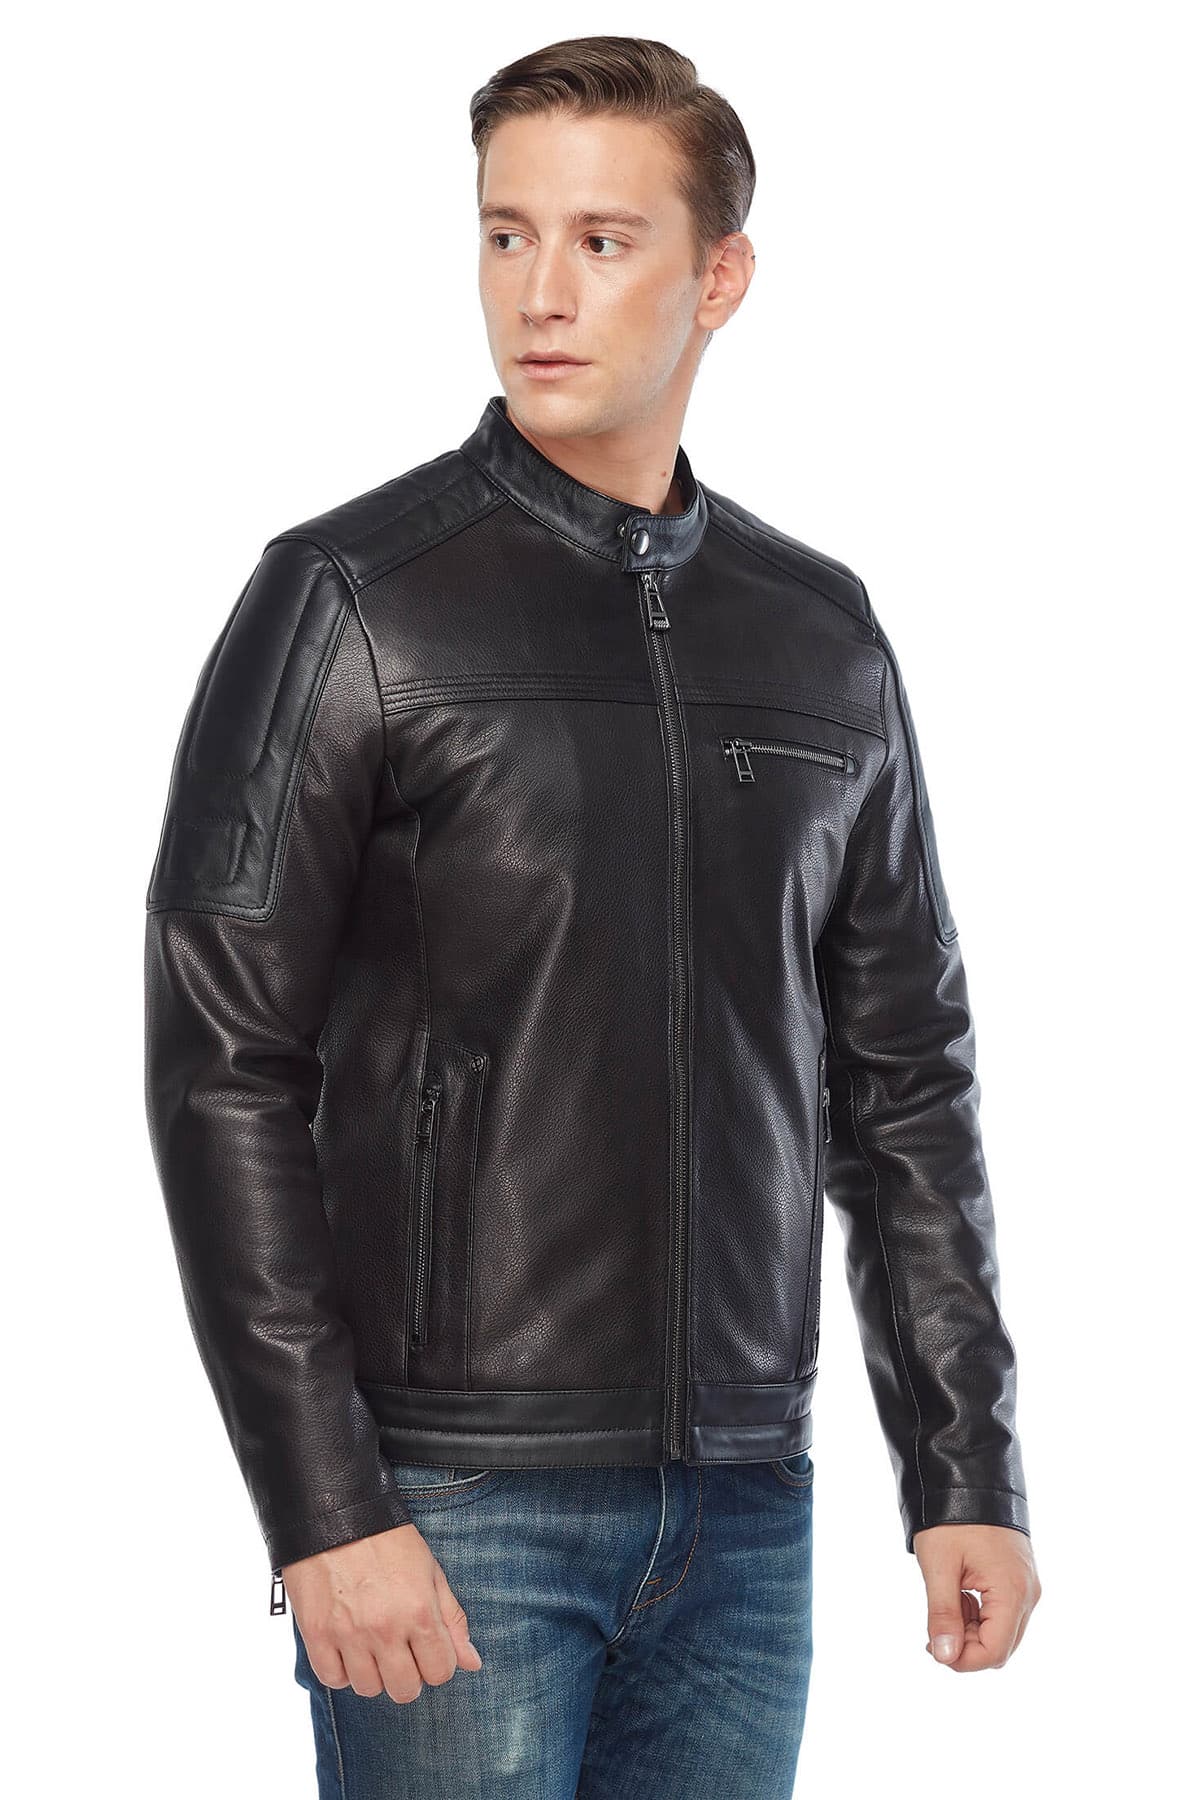 Oliver Cheshire Men's 100 % Real Black Leather Sport Jacket